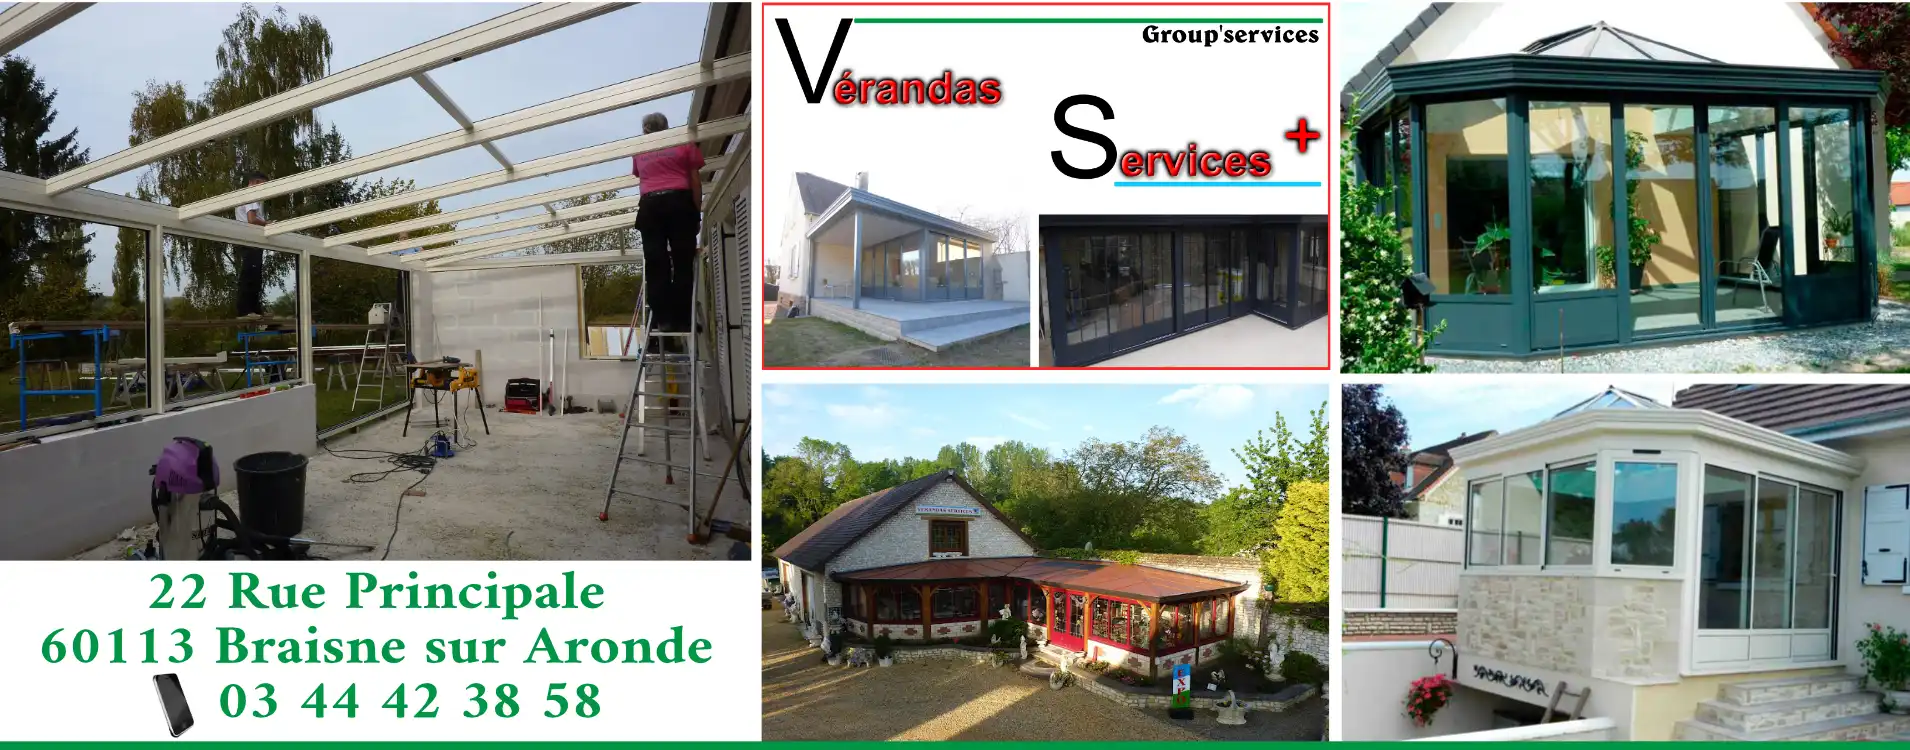 verandas-services-plus